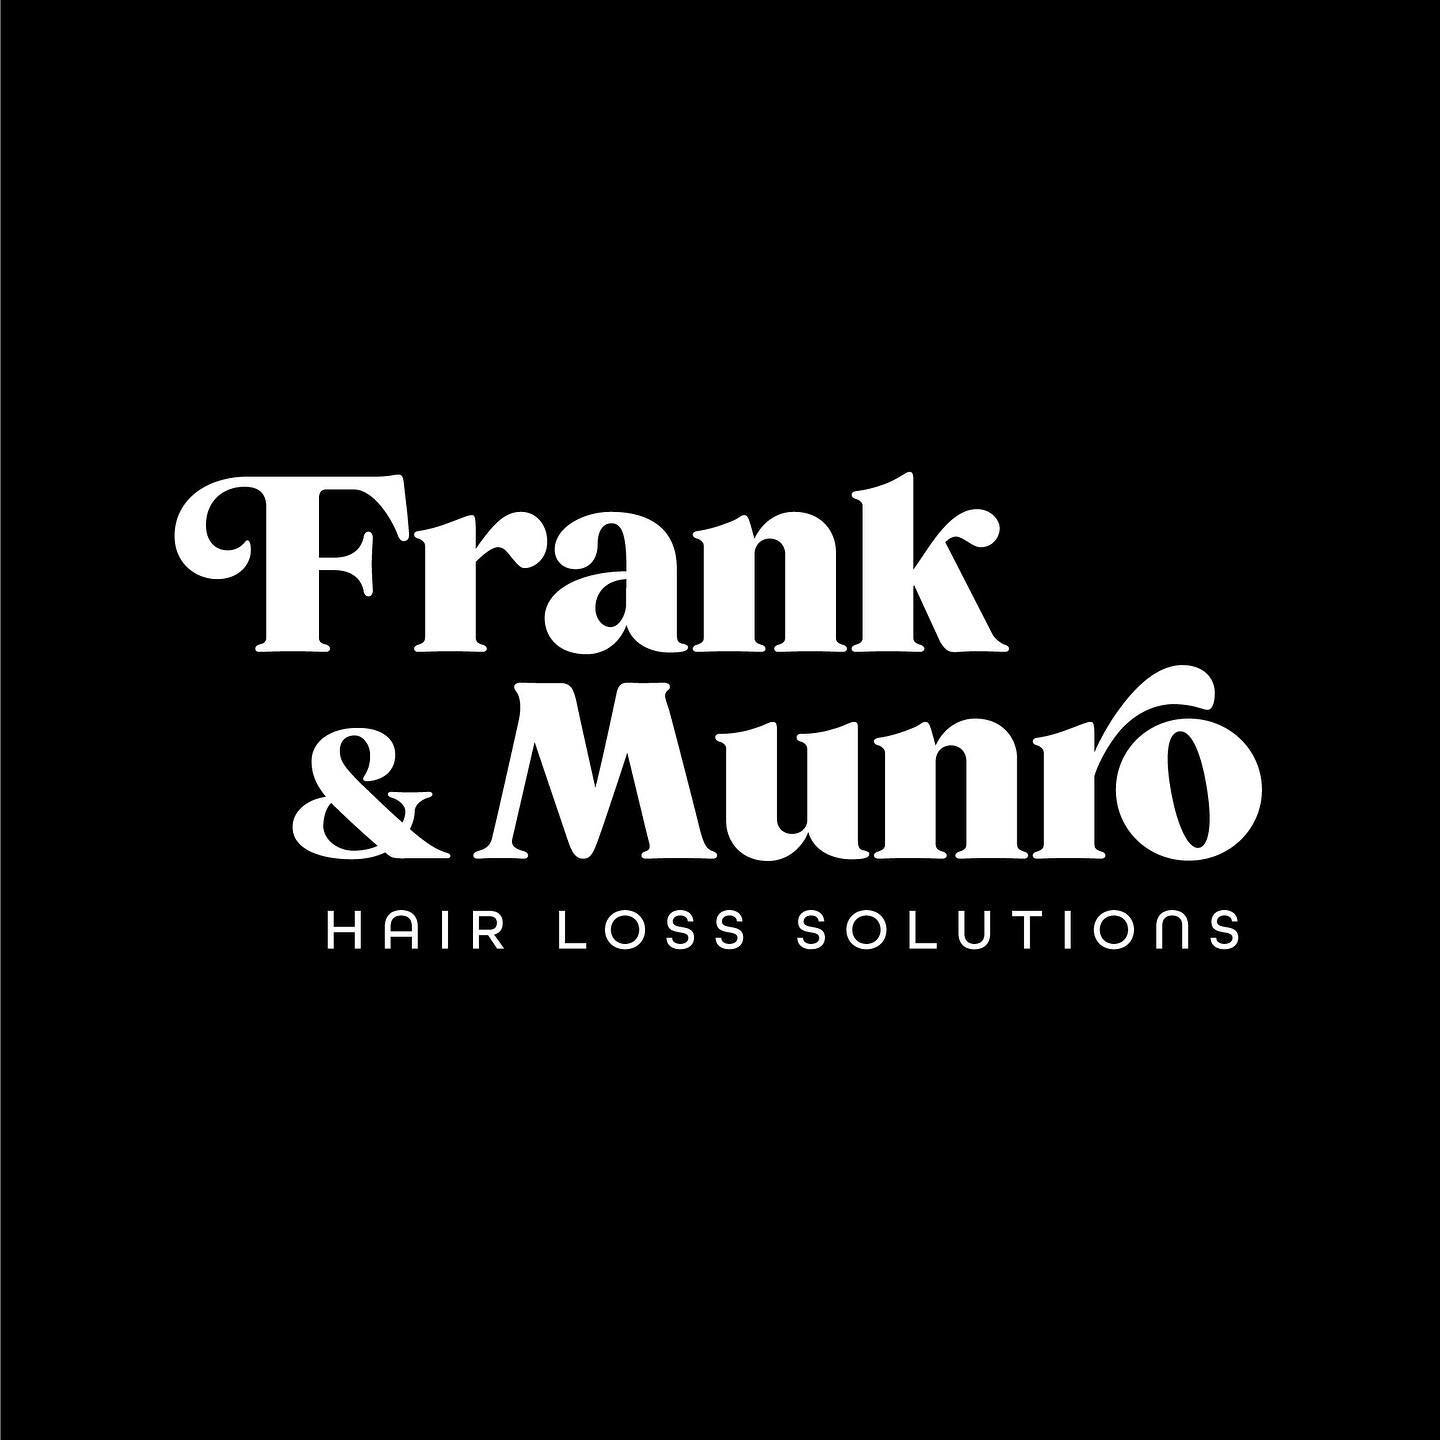 New logo design completed for @frank_and_munro 

#logodesigner #logodesign